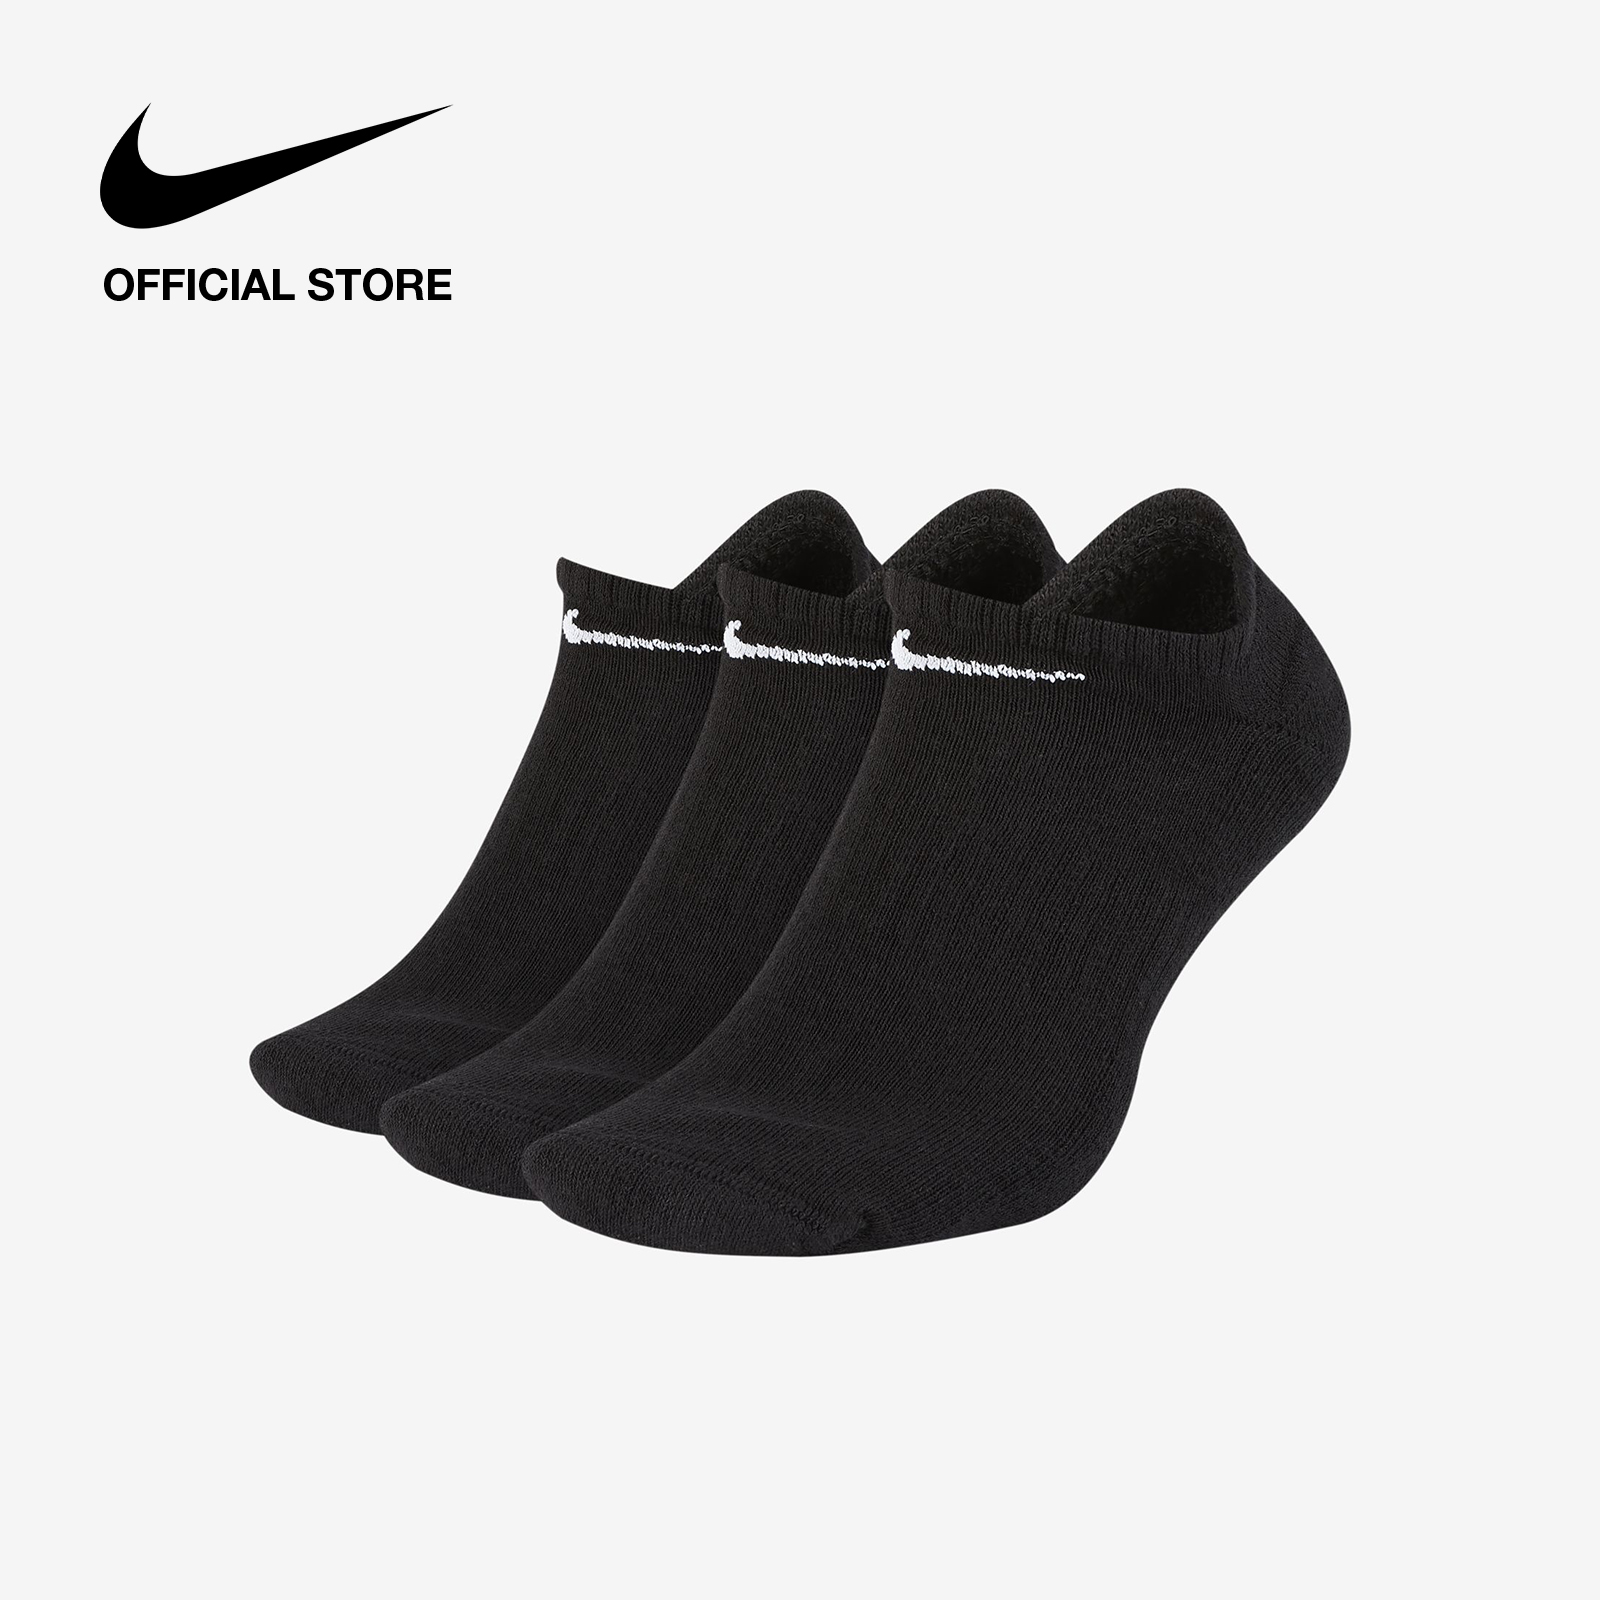 Nike Unisex Everyday Cushioned Training No-Show Socks (3 Pairs) - Black ไนกี้ ถุงเท้าเทรนนิ่งยูนิเซ็กส์แบบซ่อน เอเวอรี่เดย์ คูชั่น (3 คู่) - สีดำ